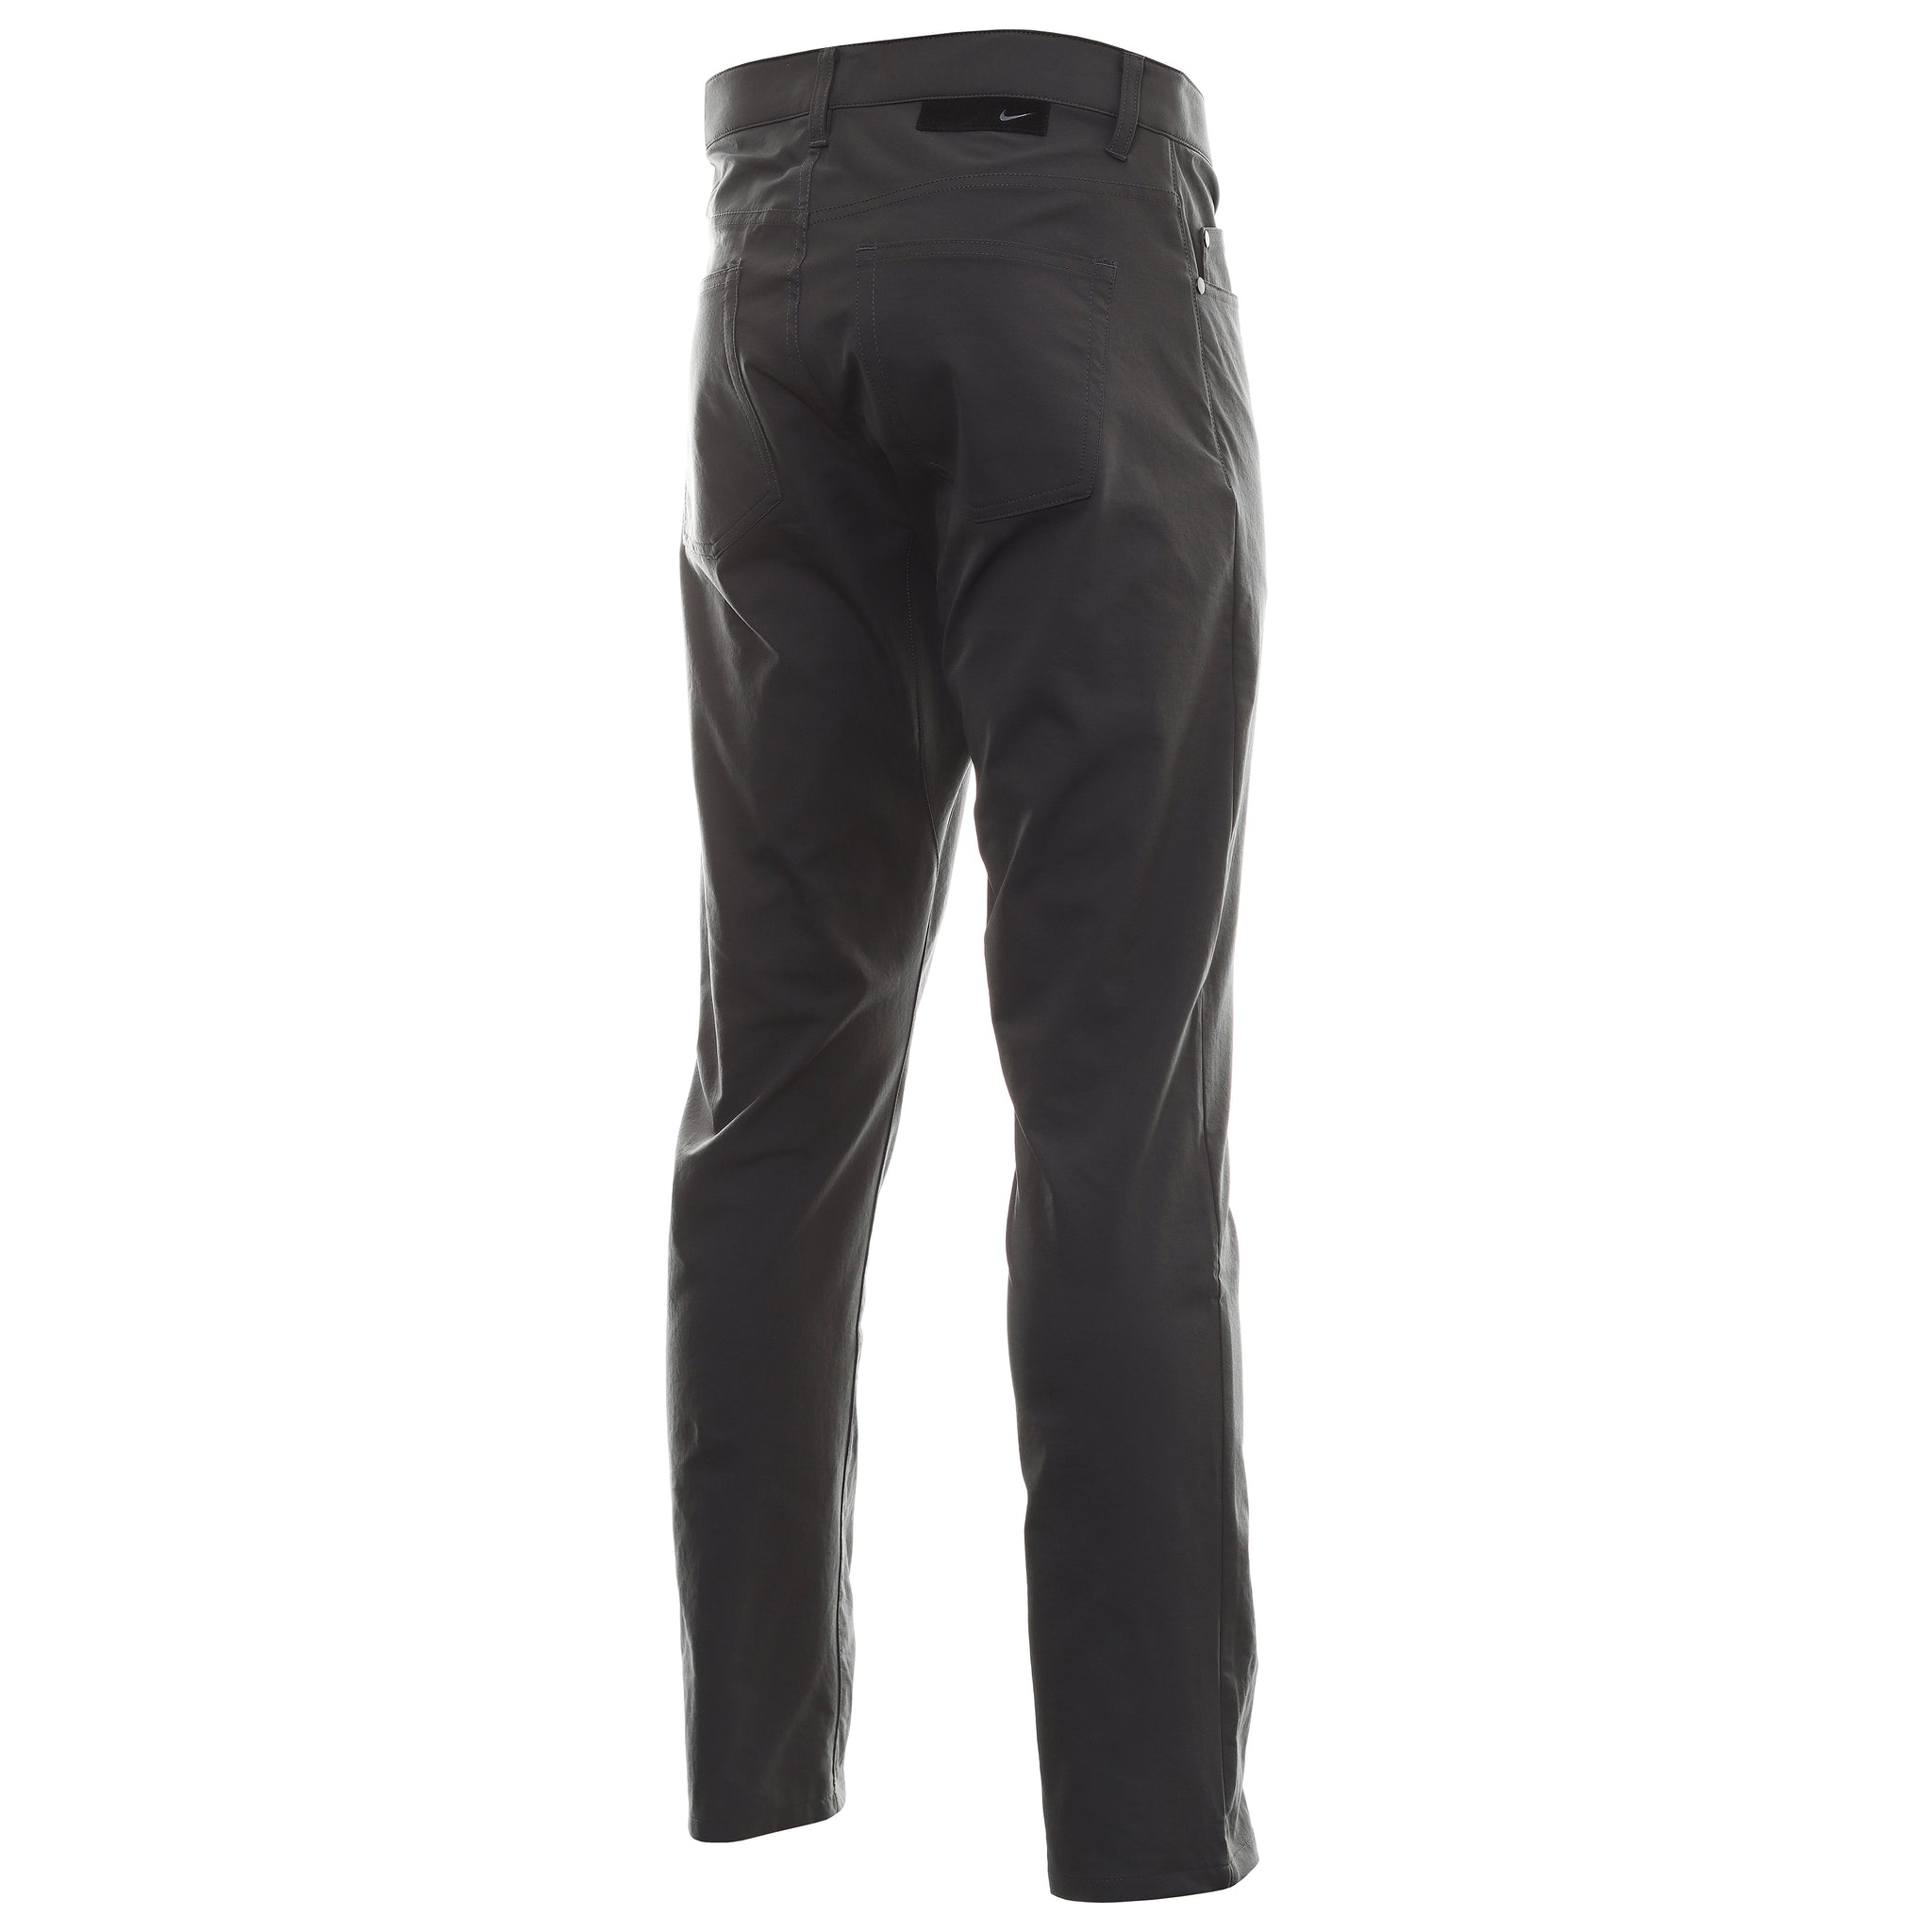 nike-golf-dry-repel-5-pocket-pants-da3064-070-dark-smoke-grey